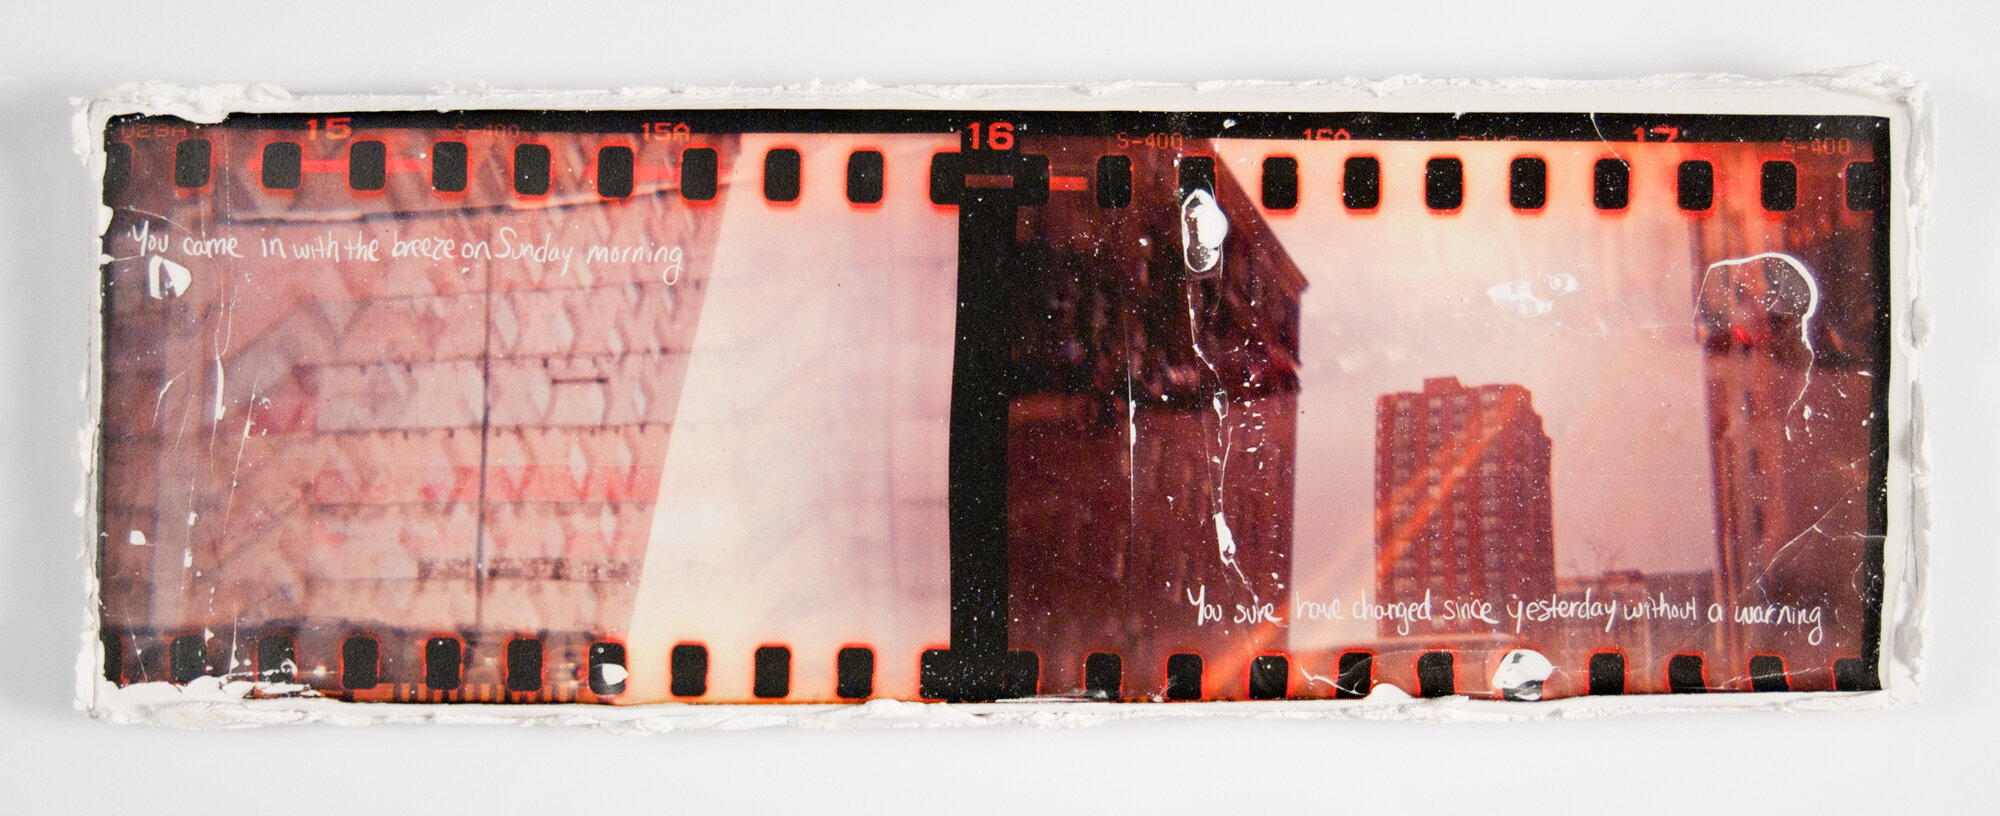  Without A Warning, 2012 6x16”   Inkjet Photo Transfer on Plaster 